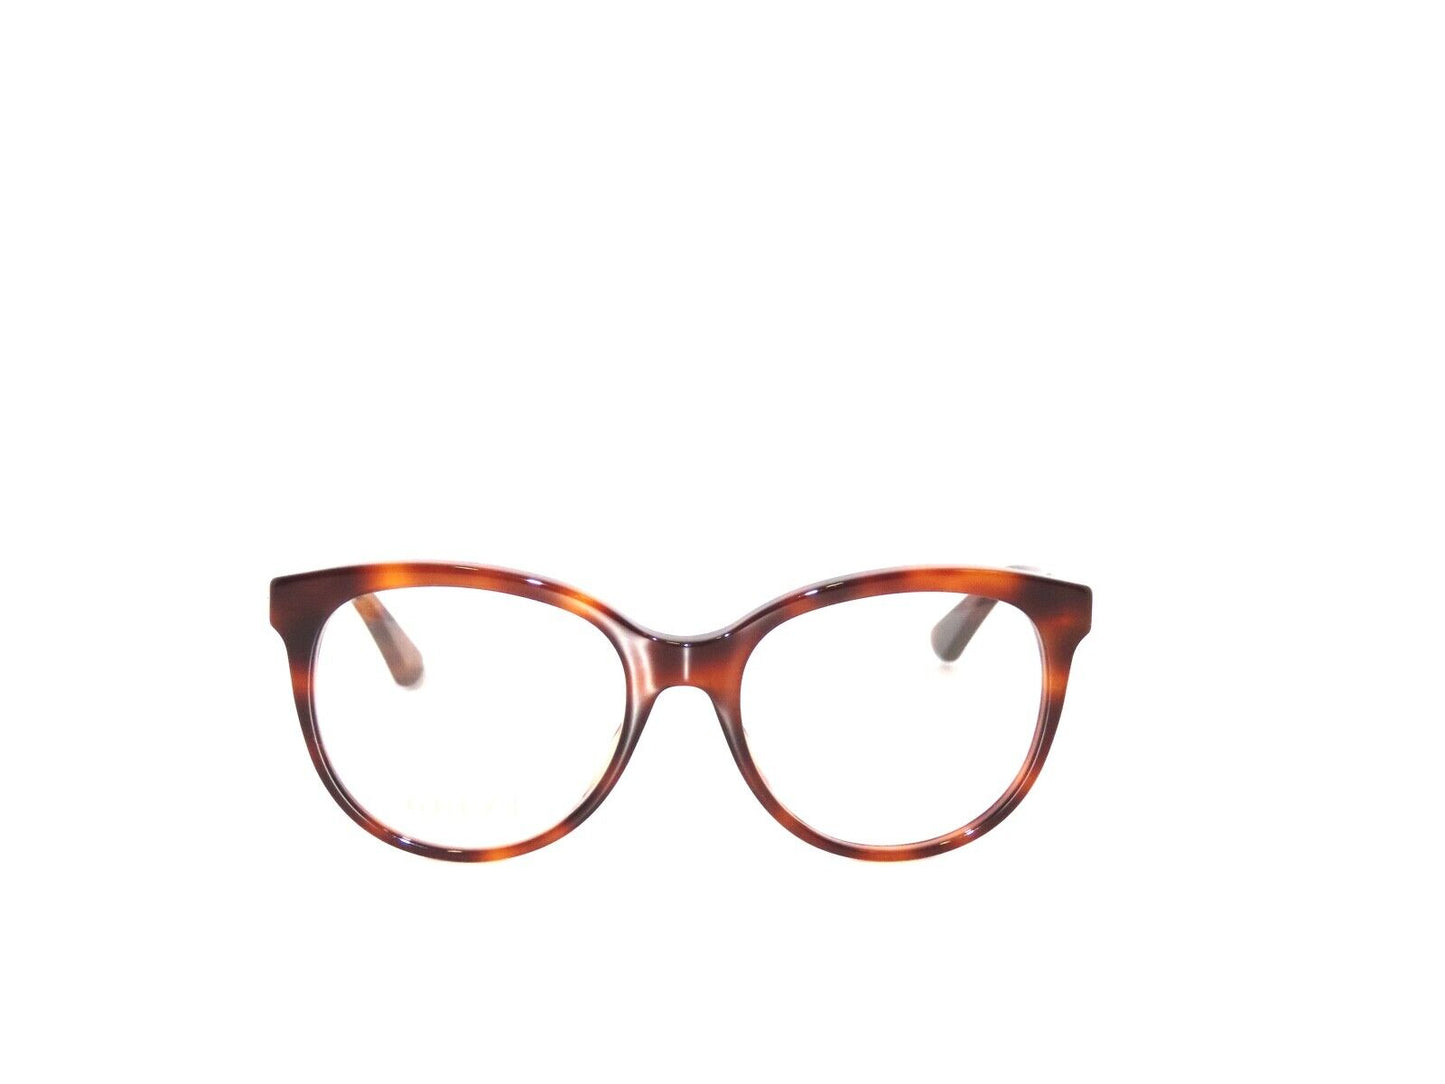 Gucci GG0329o-002 53mm New Eyeglasses